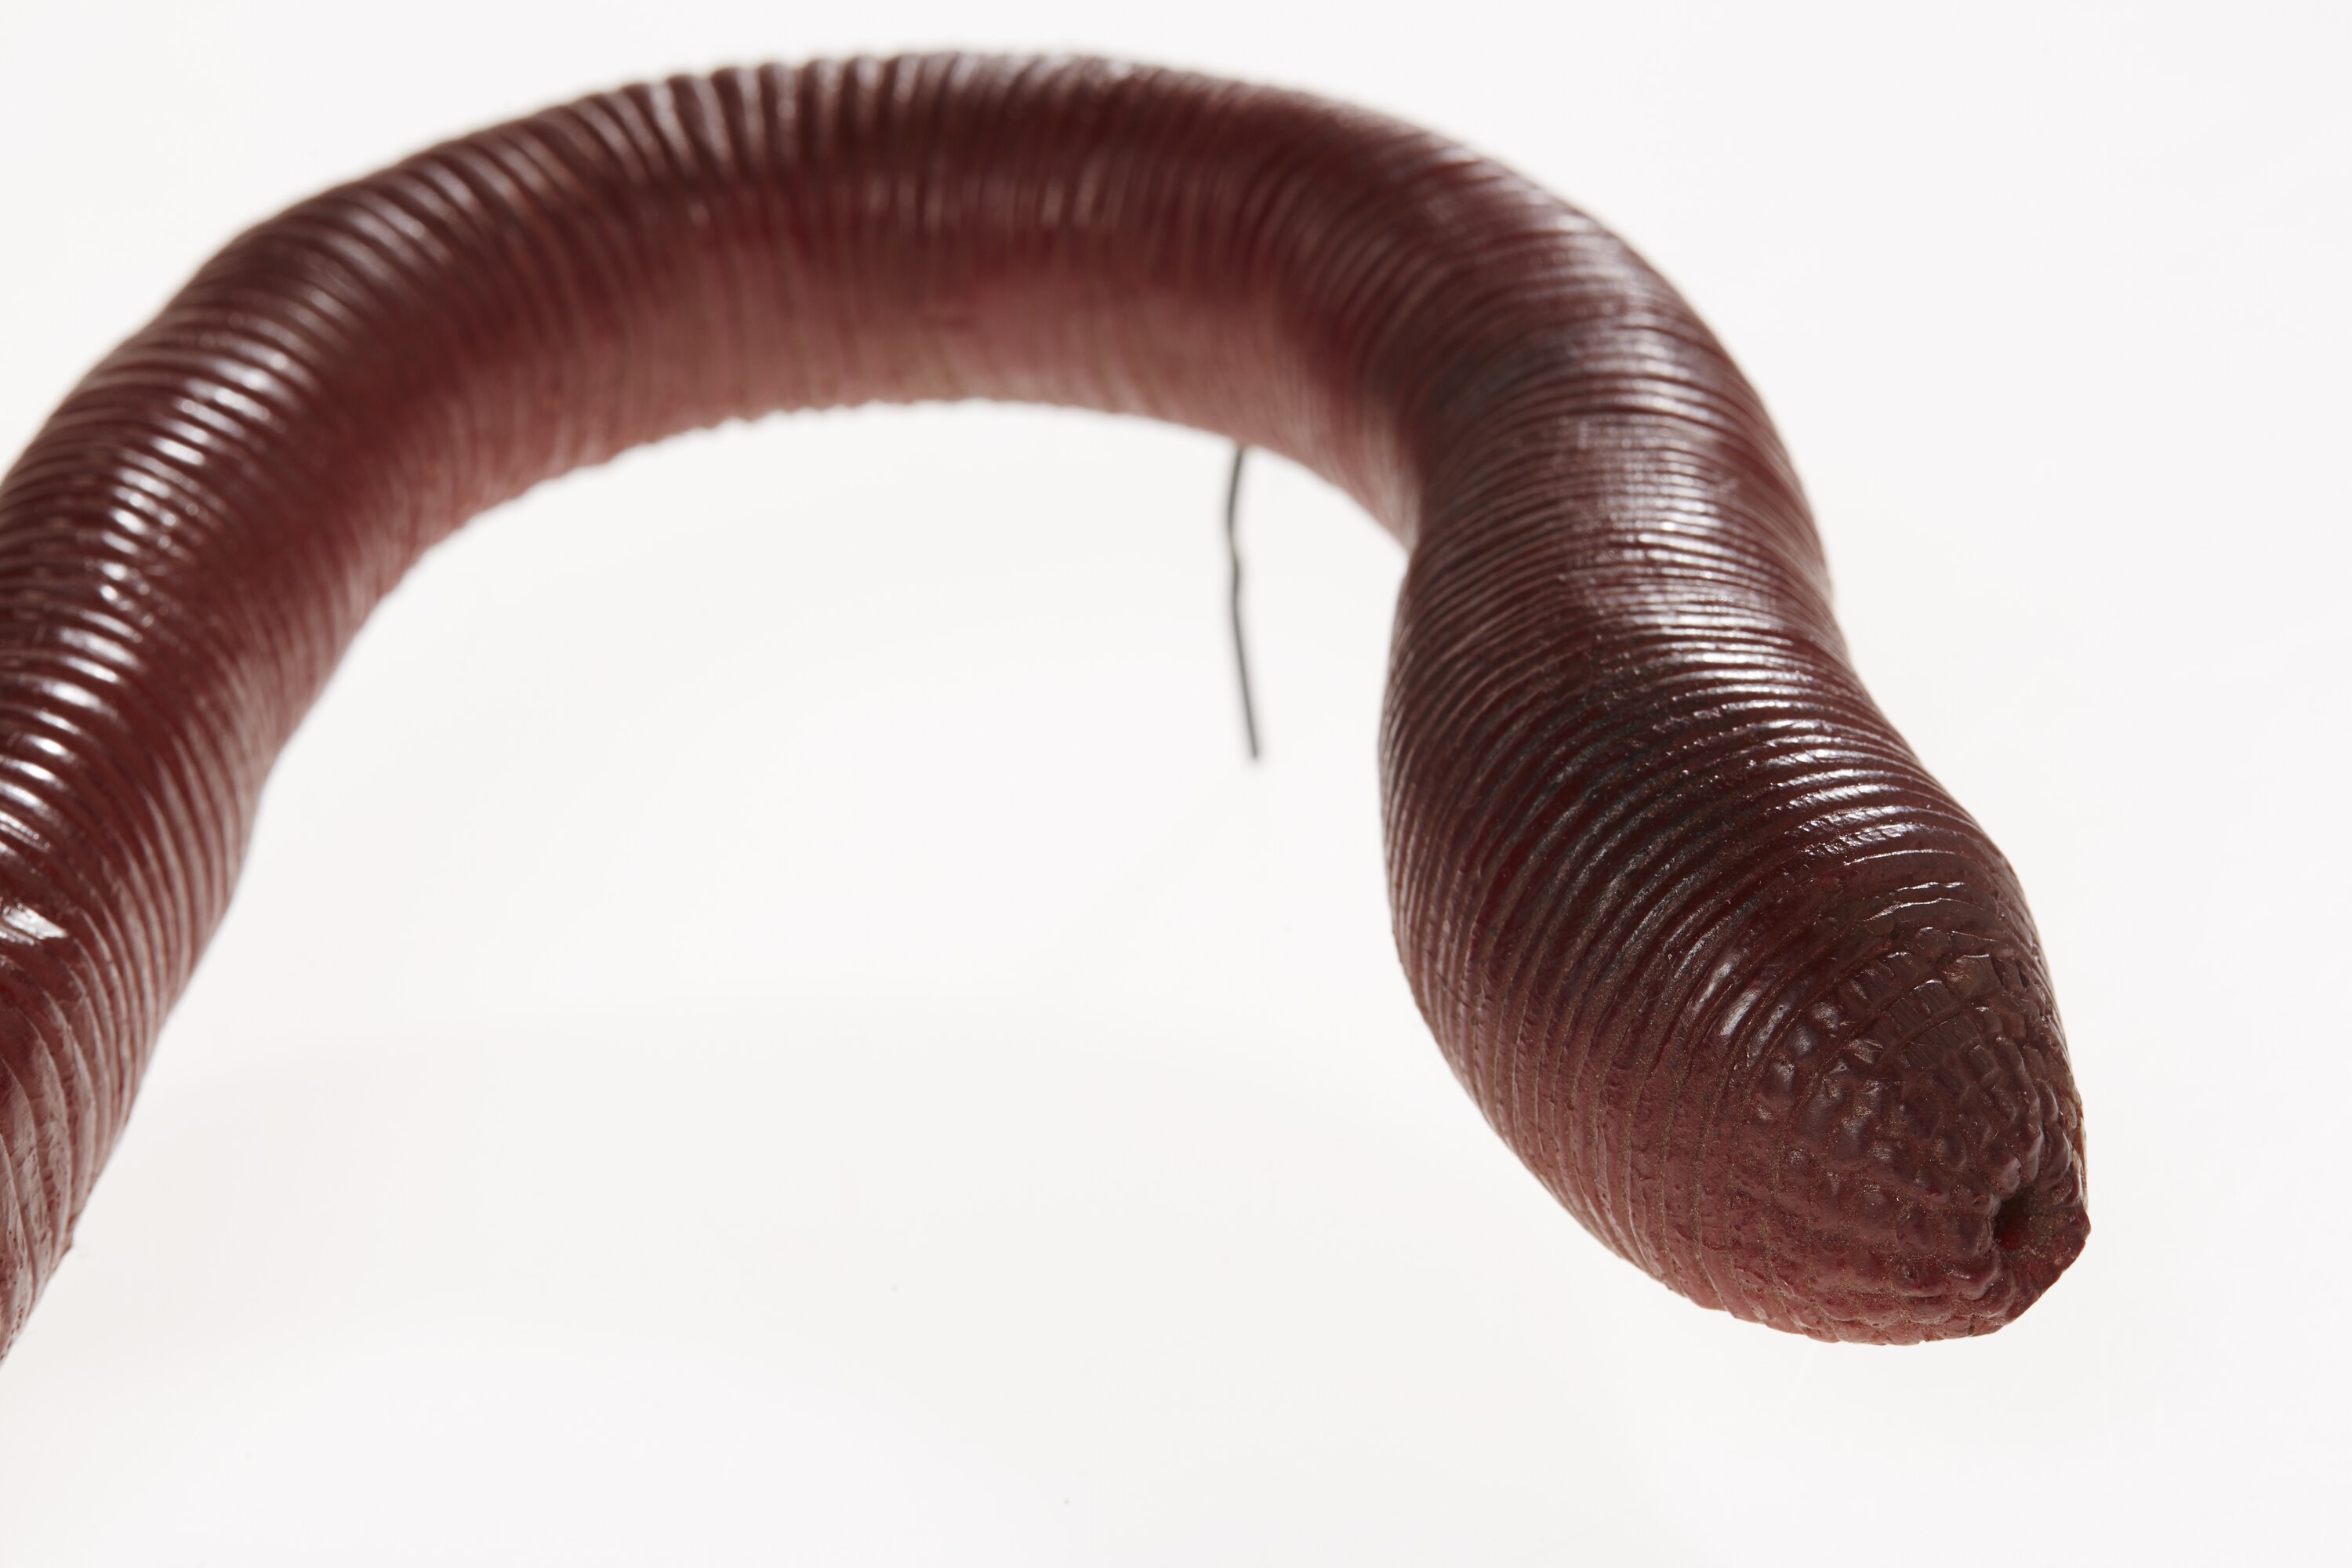 Model Giant Gippsland Earthworm, Megascolides australis McCoy, 1878